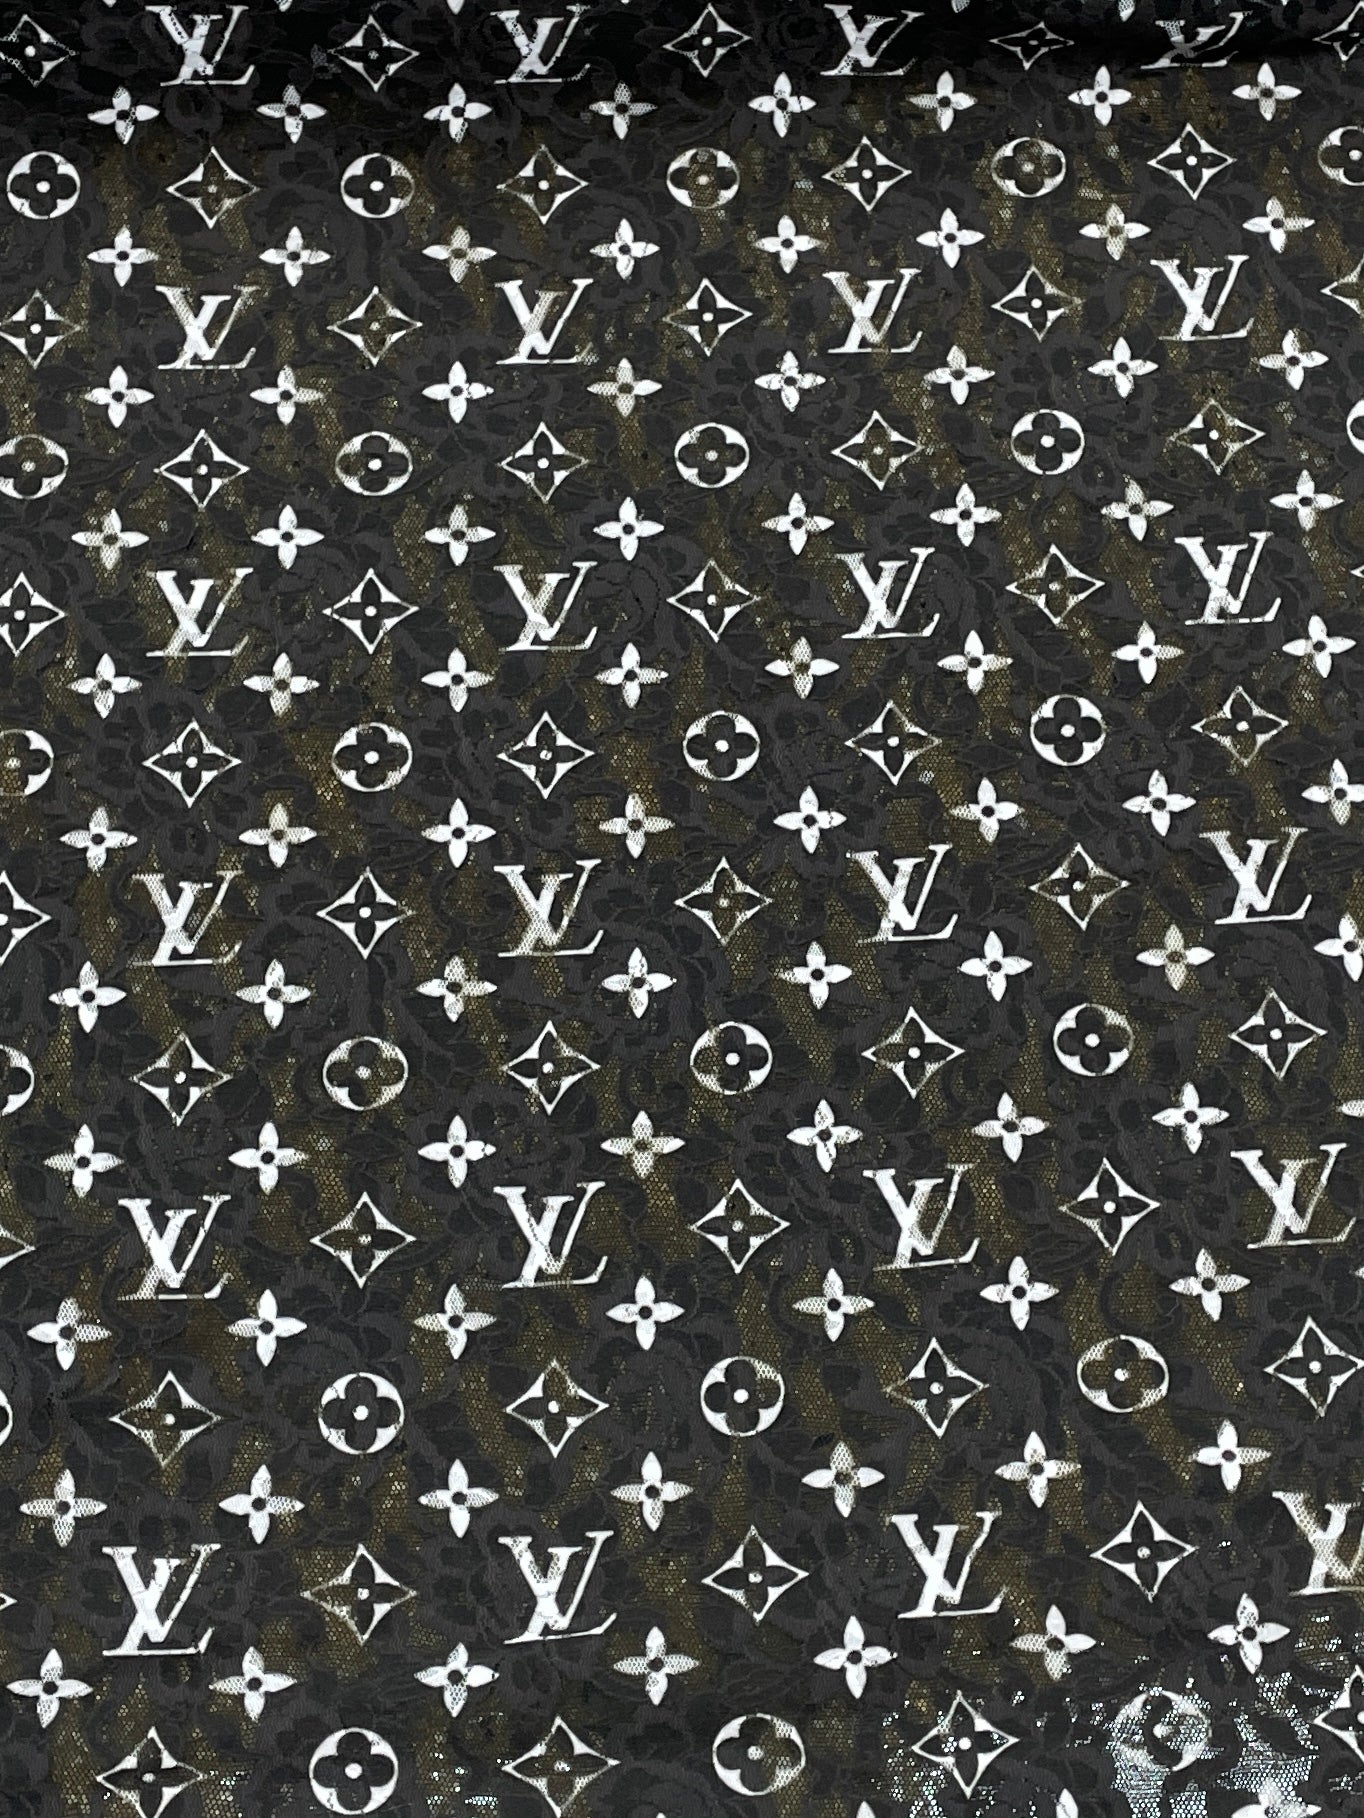 Louis Vuitton Stretch Fabric